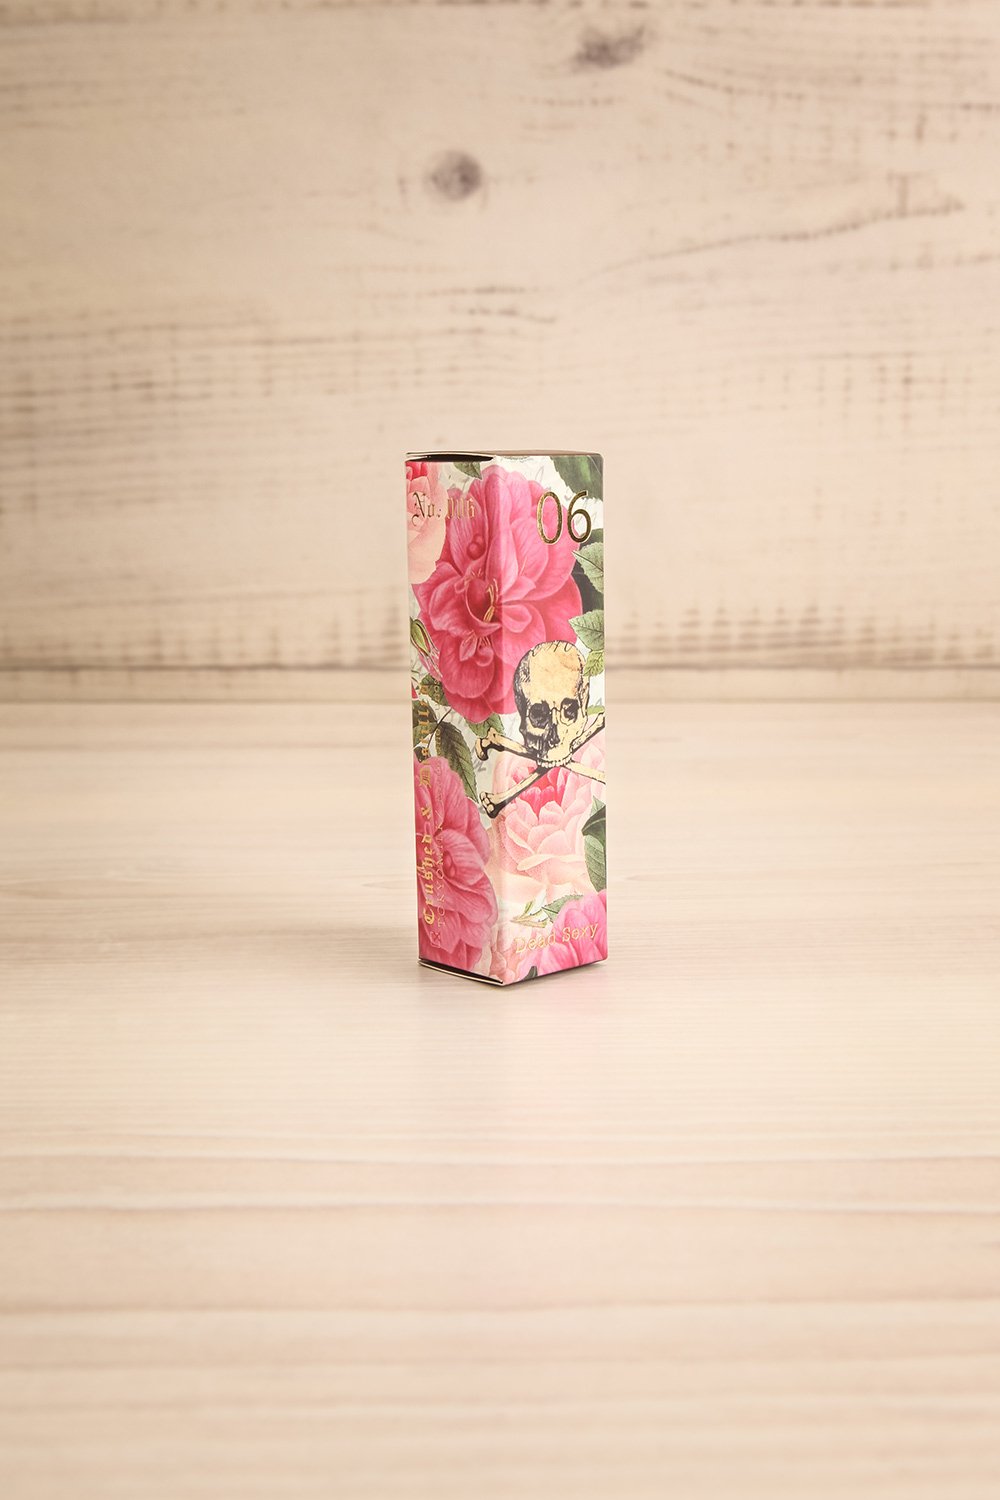 Handcream - Dead Sexy - Tokyo Milk shea hand cream flower packaging